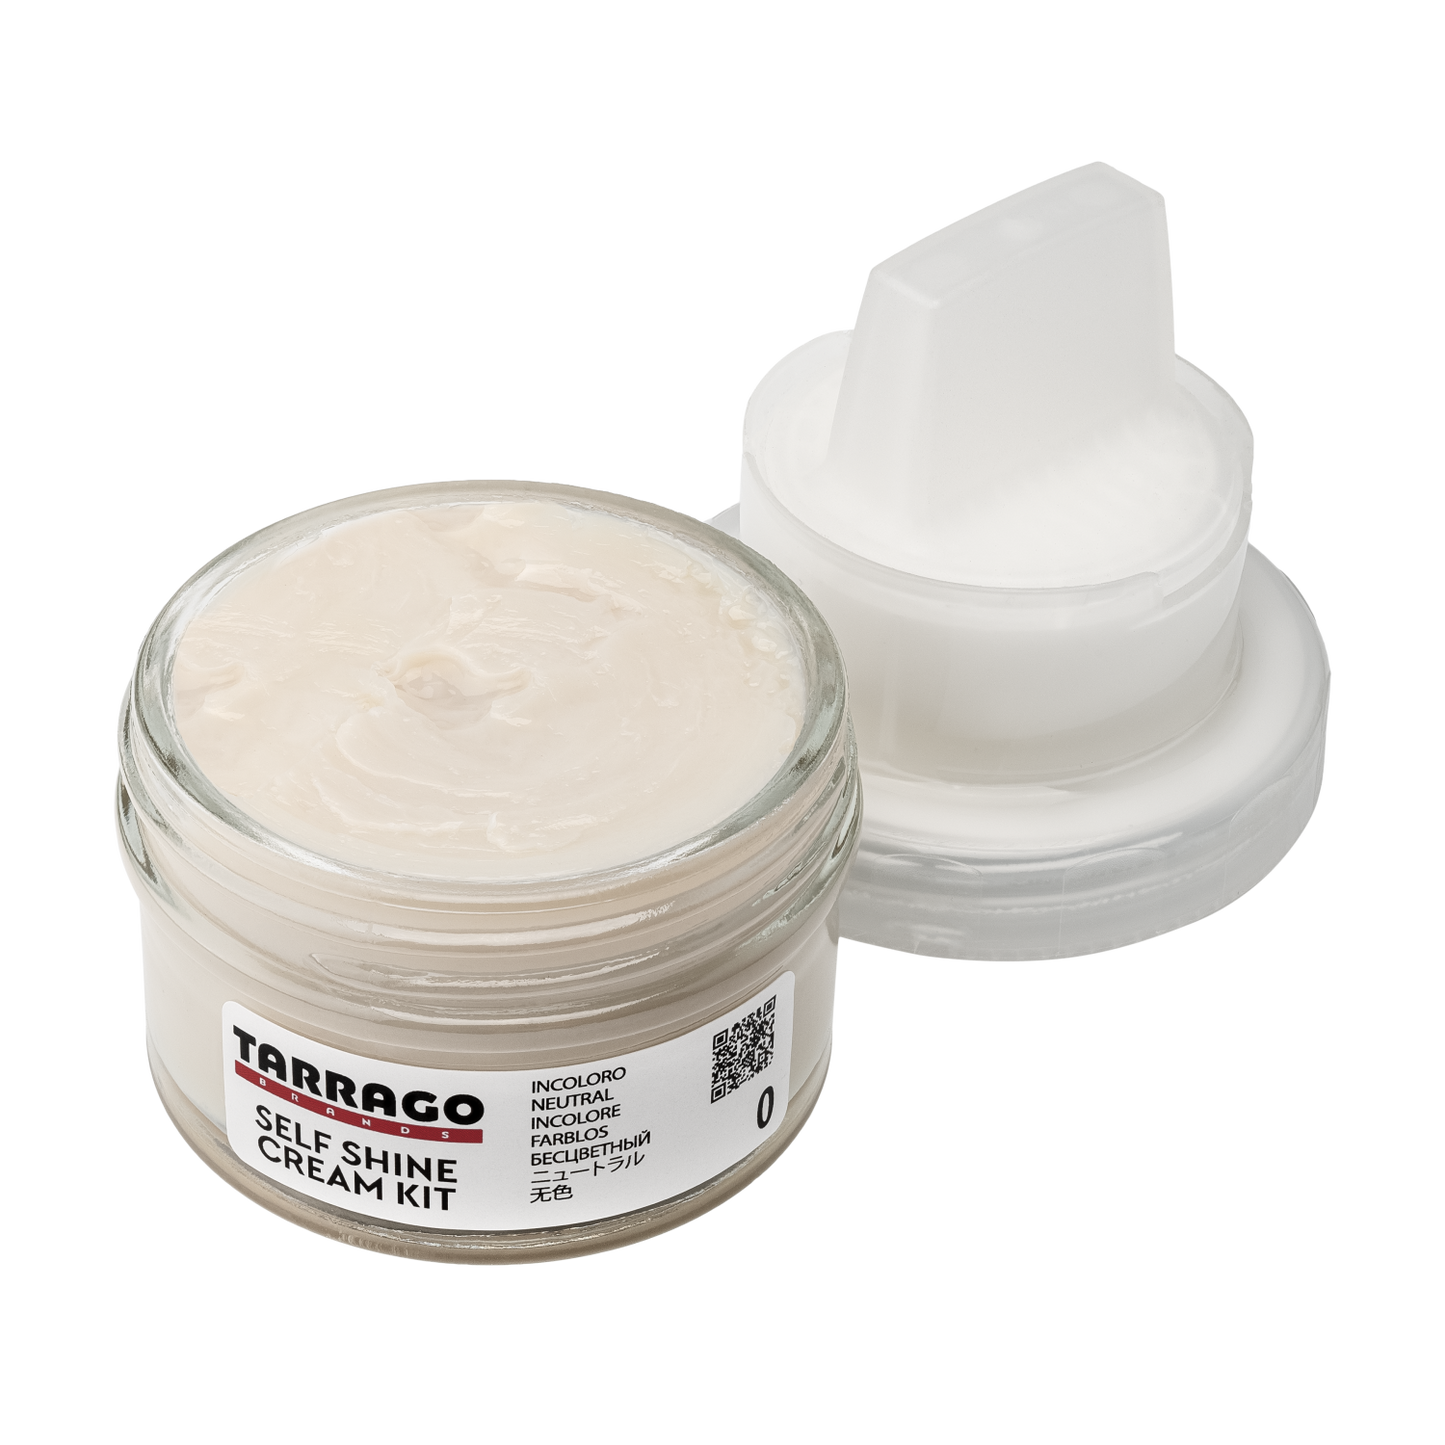 Tarrago Self Shine Cream Kit